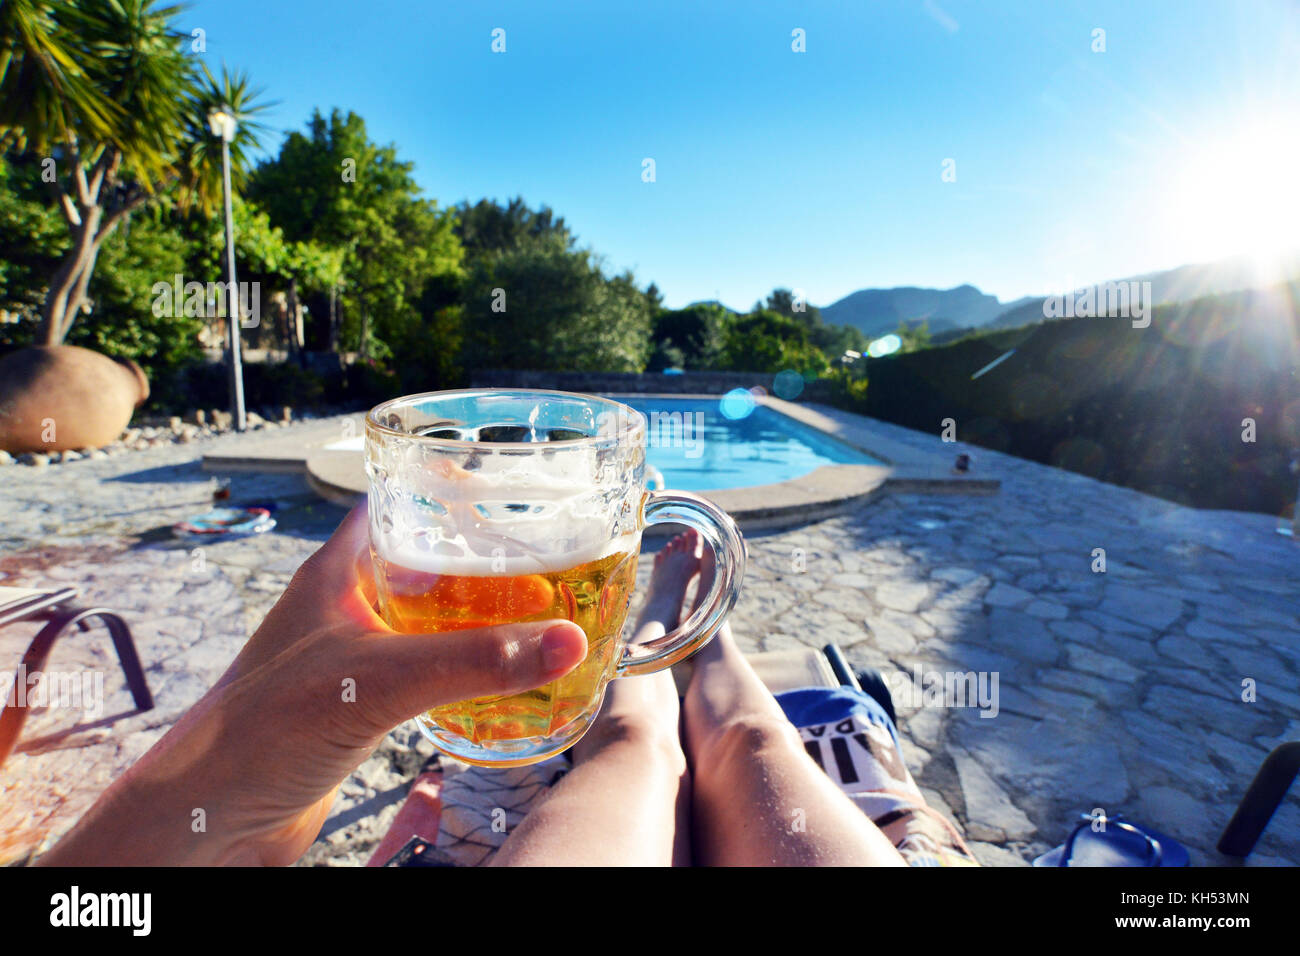 Idyllic Holiday villa with swimming pool on the Island of Mallorca Spain Stock Photo